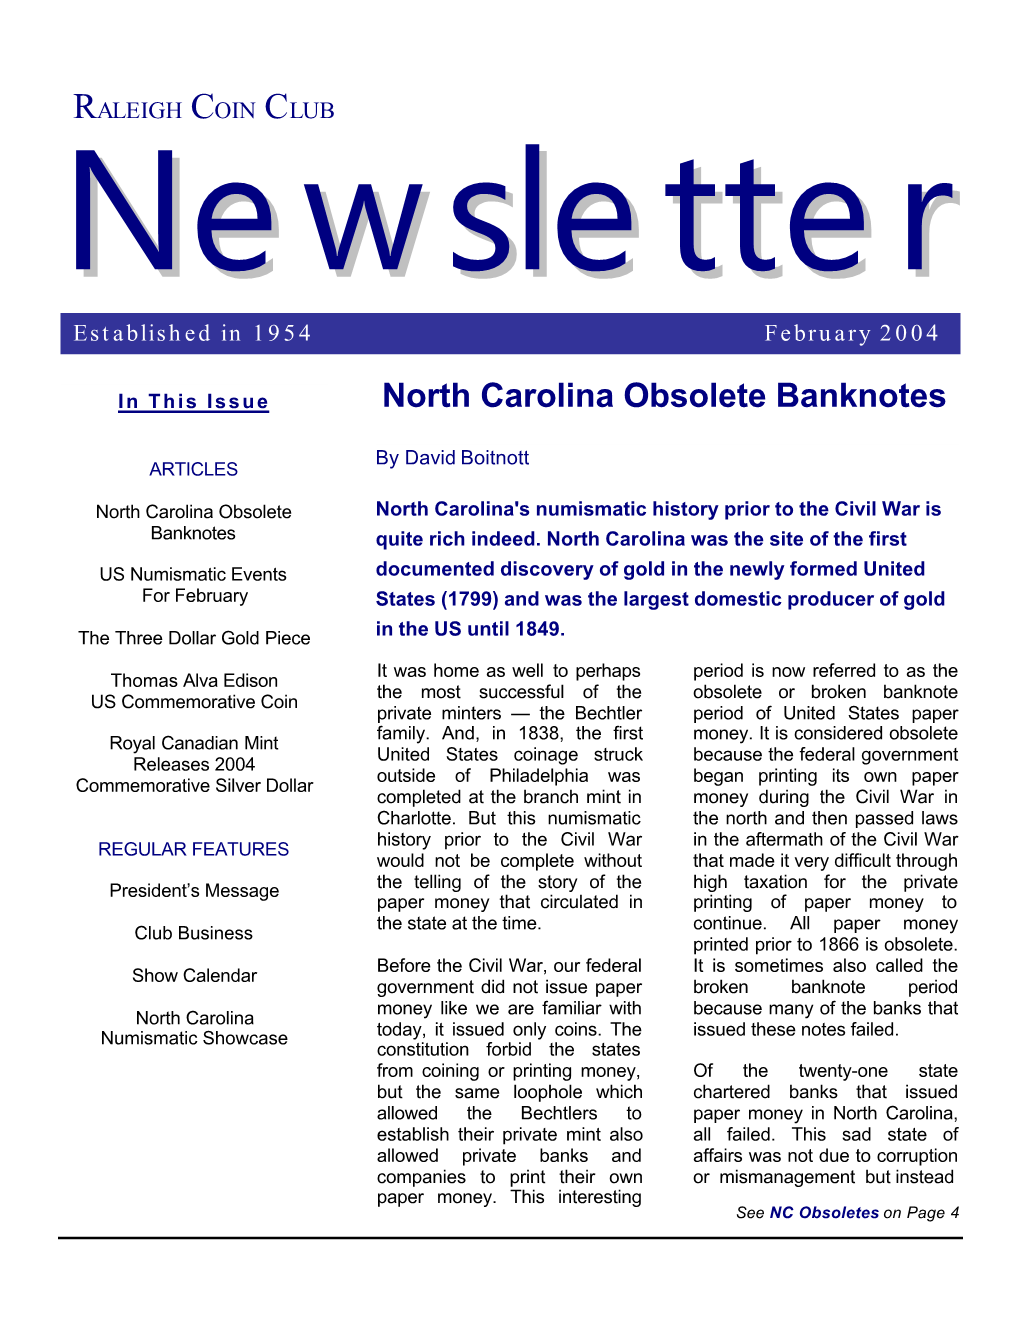 North Carolina Obsolete Banknotes